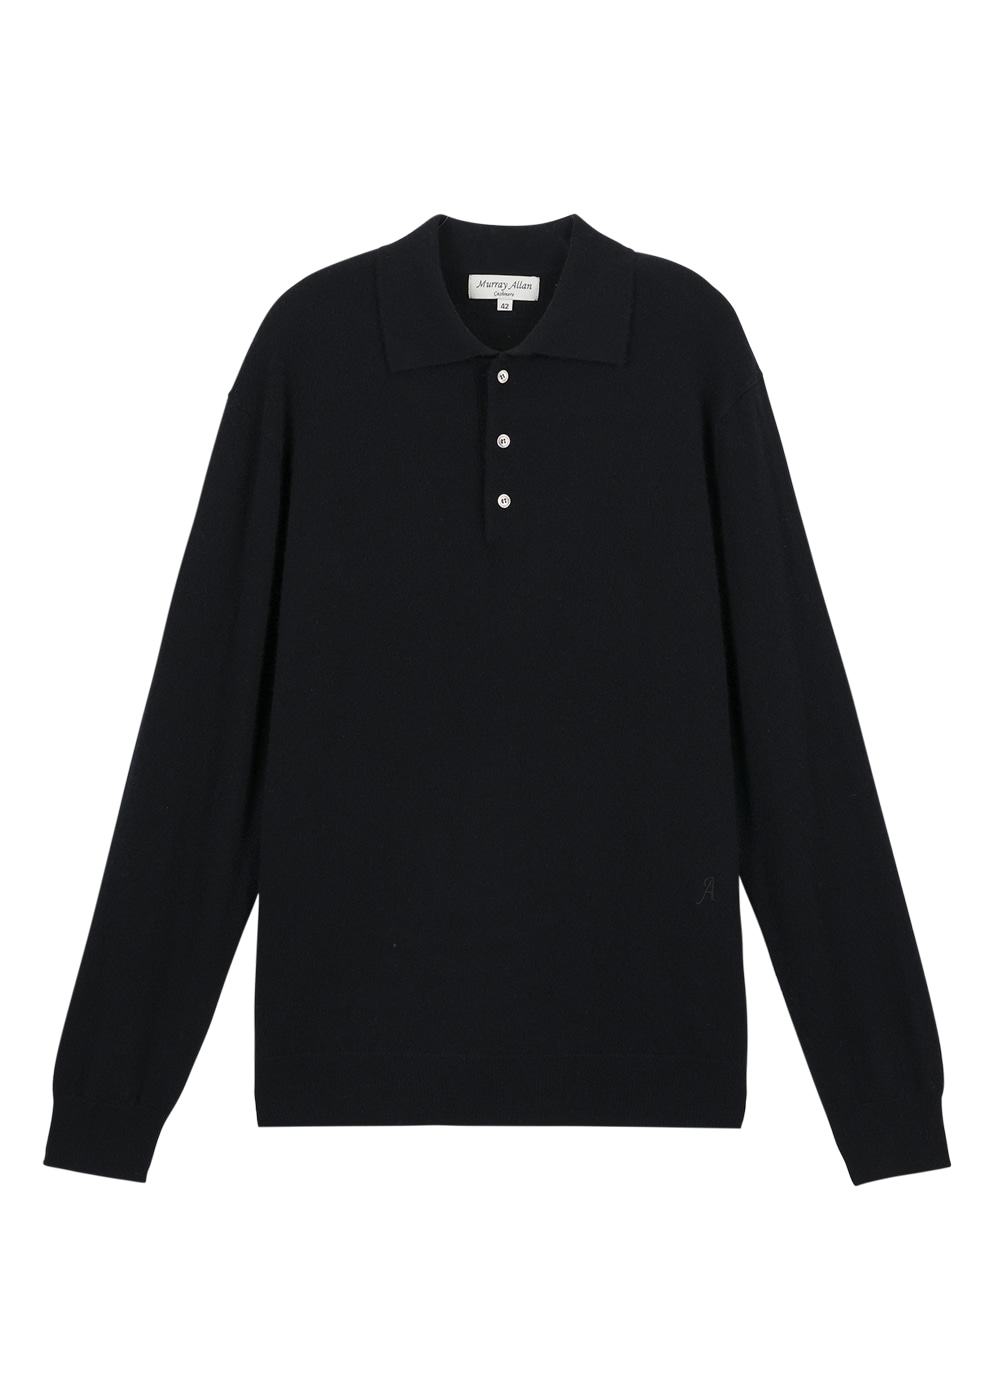 A LOGO shirt pullover (black)  20%